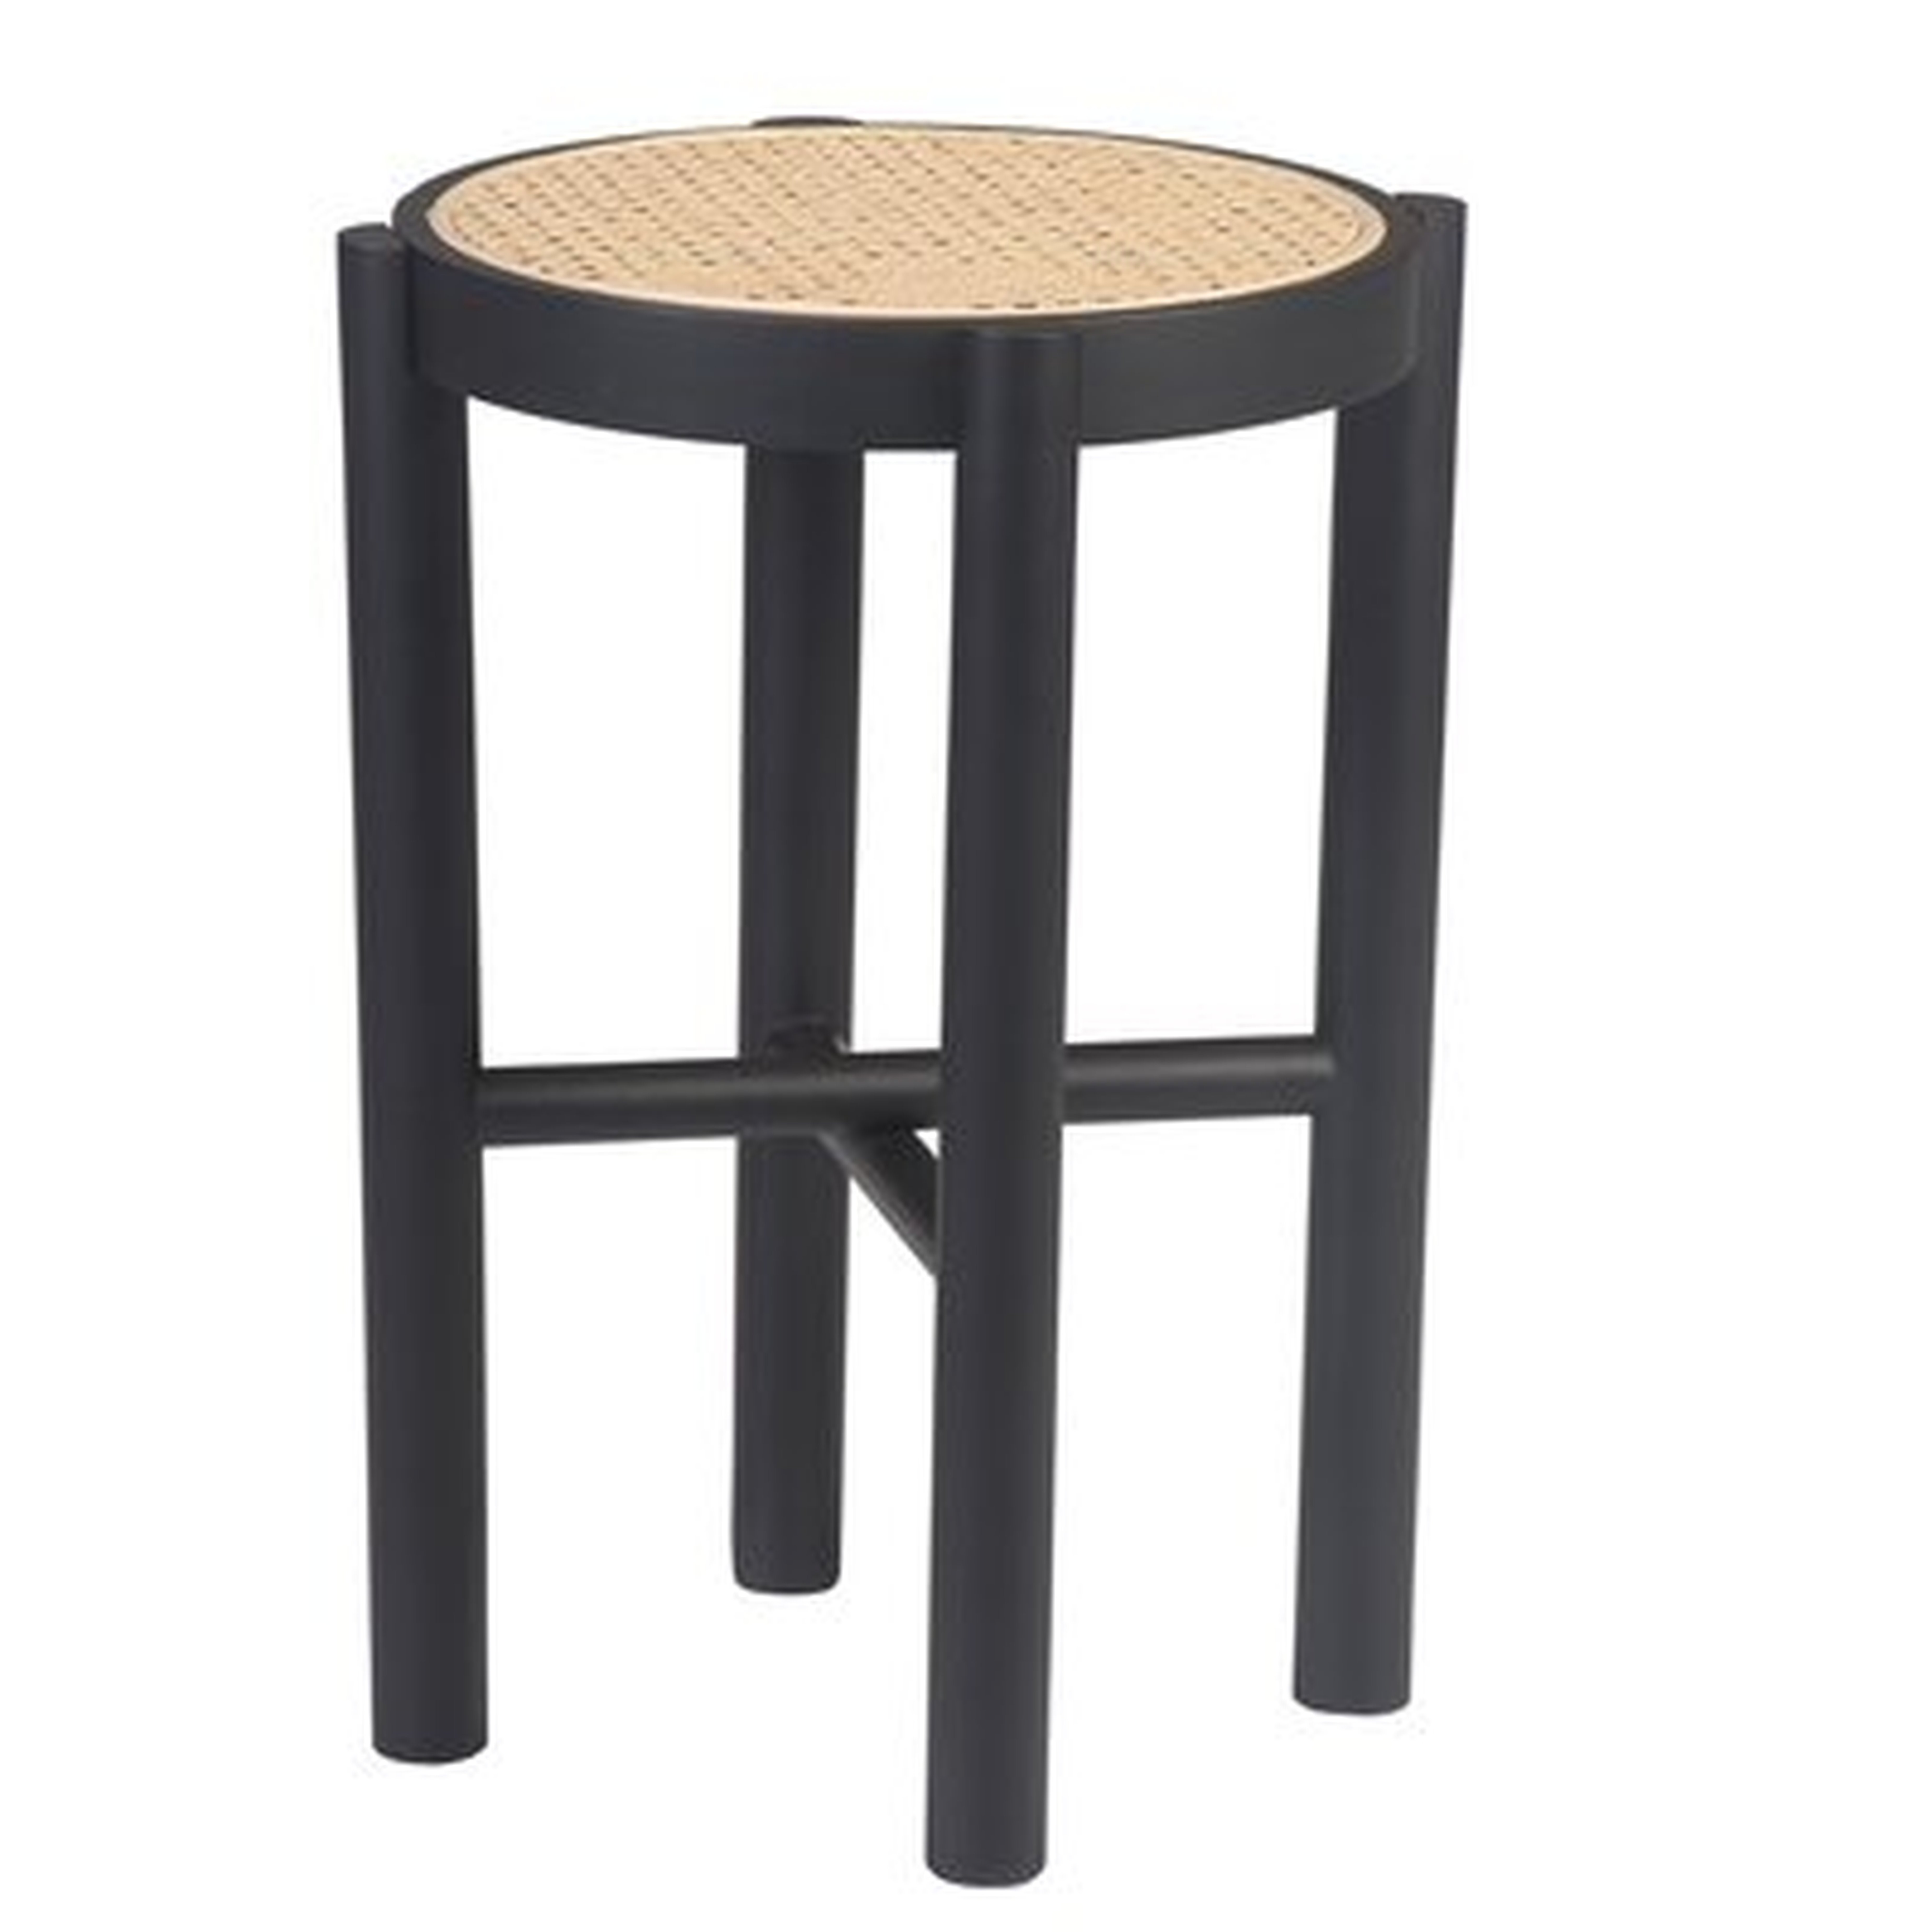 Calydon Solid Wood End Table, Black - Wayfair